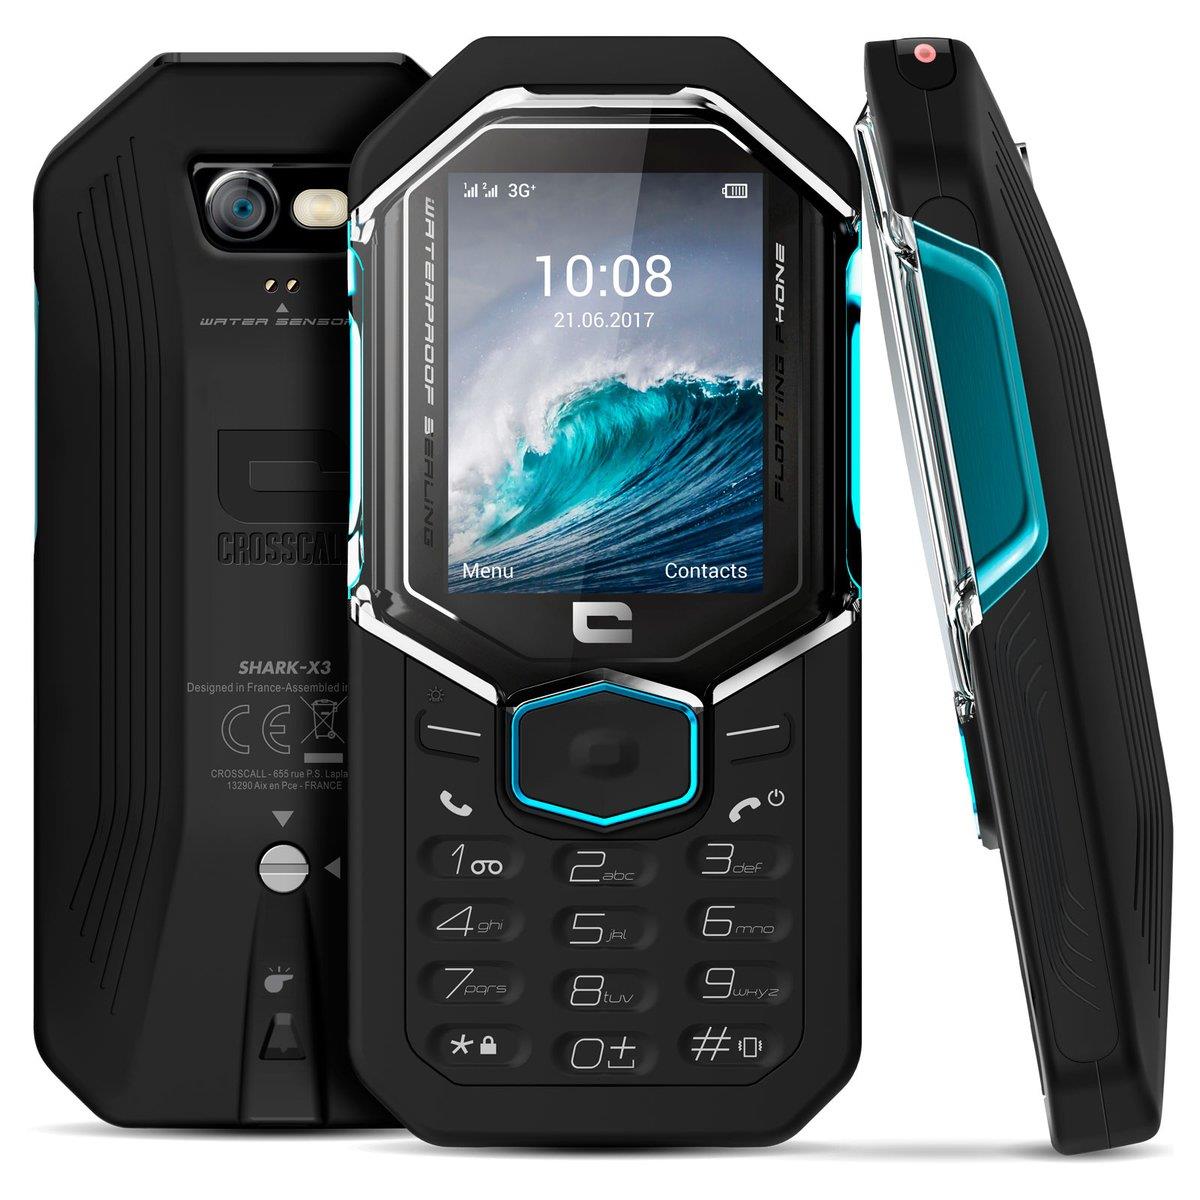 Mobilni telefon Crosscall Shark-X3, črna